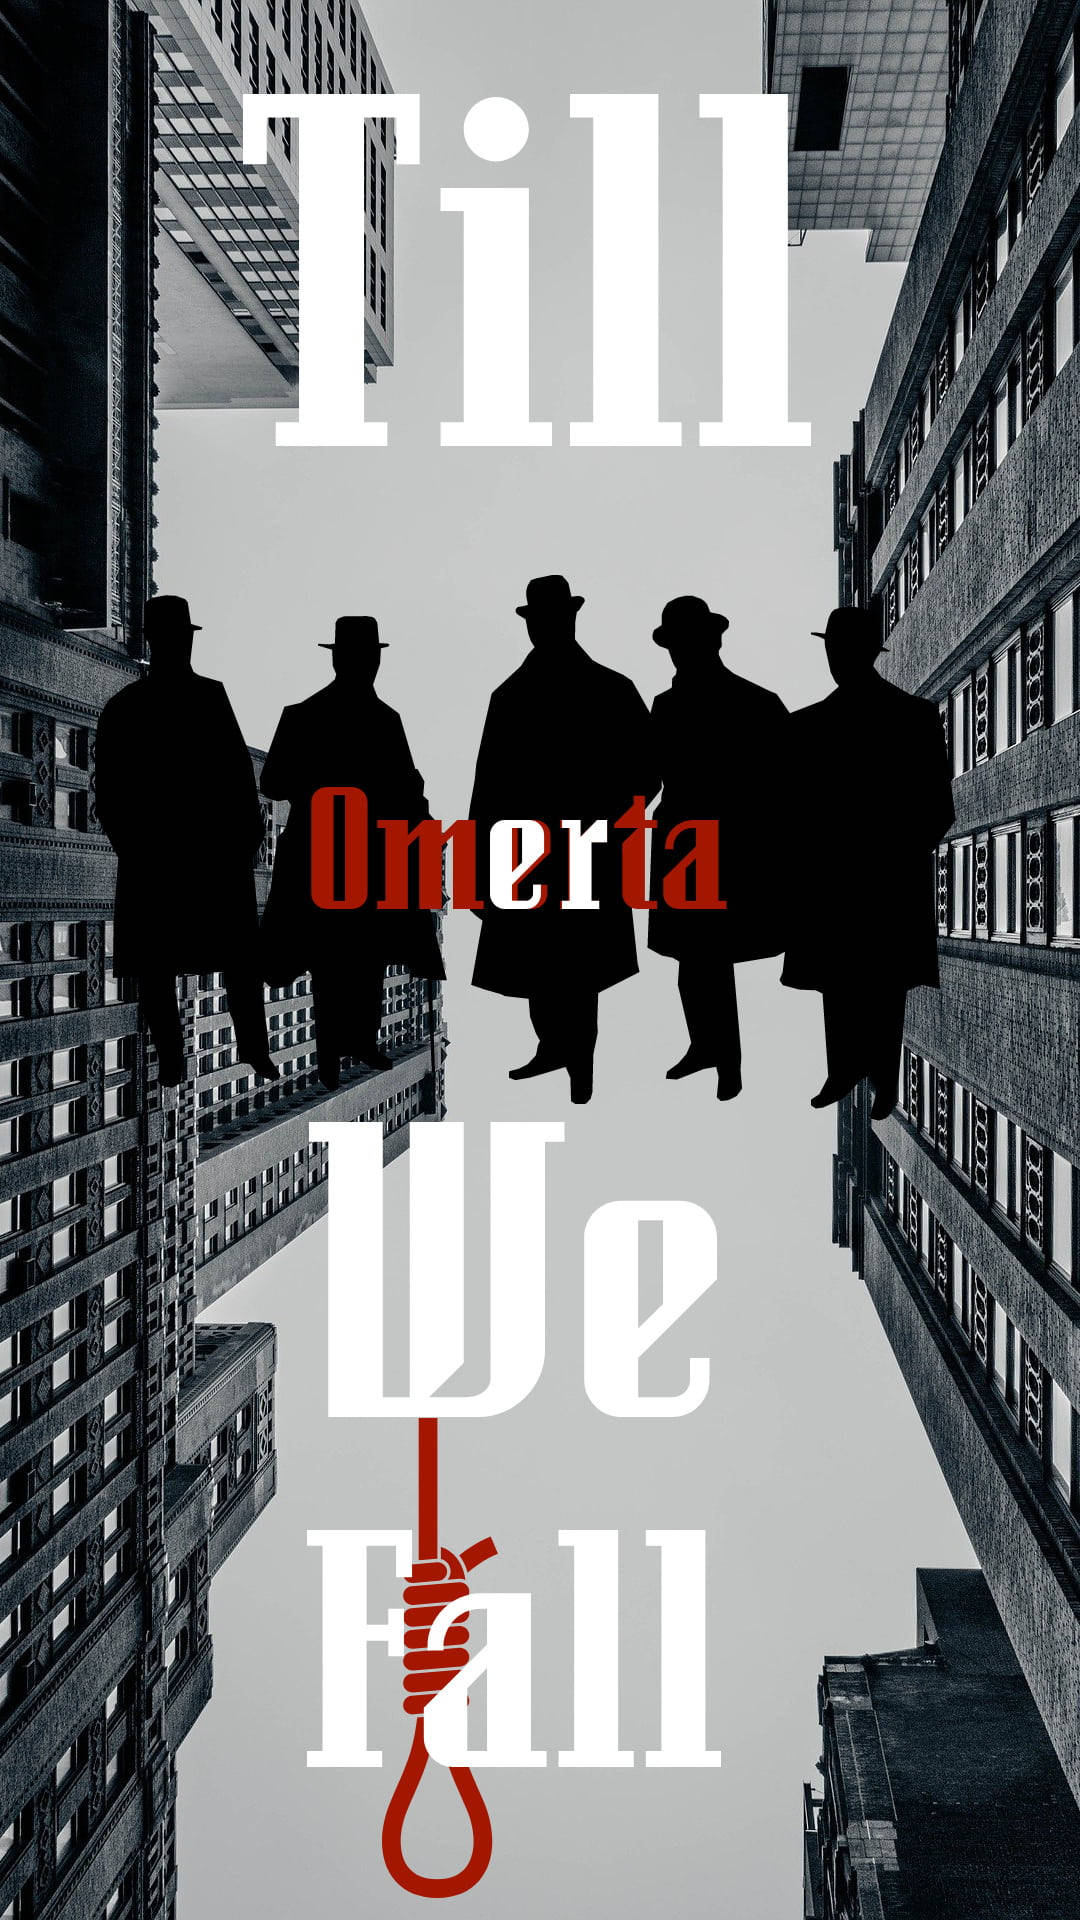 Omerta From Italian Mafia Background